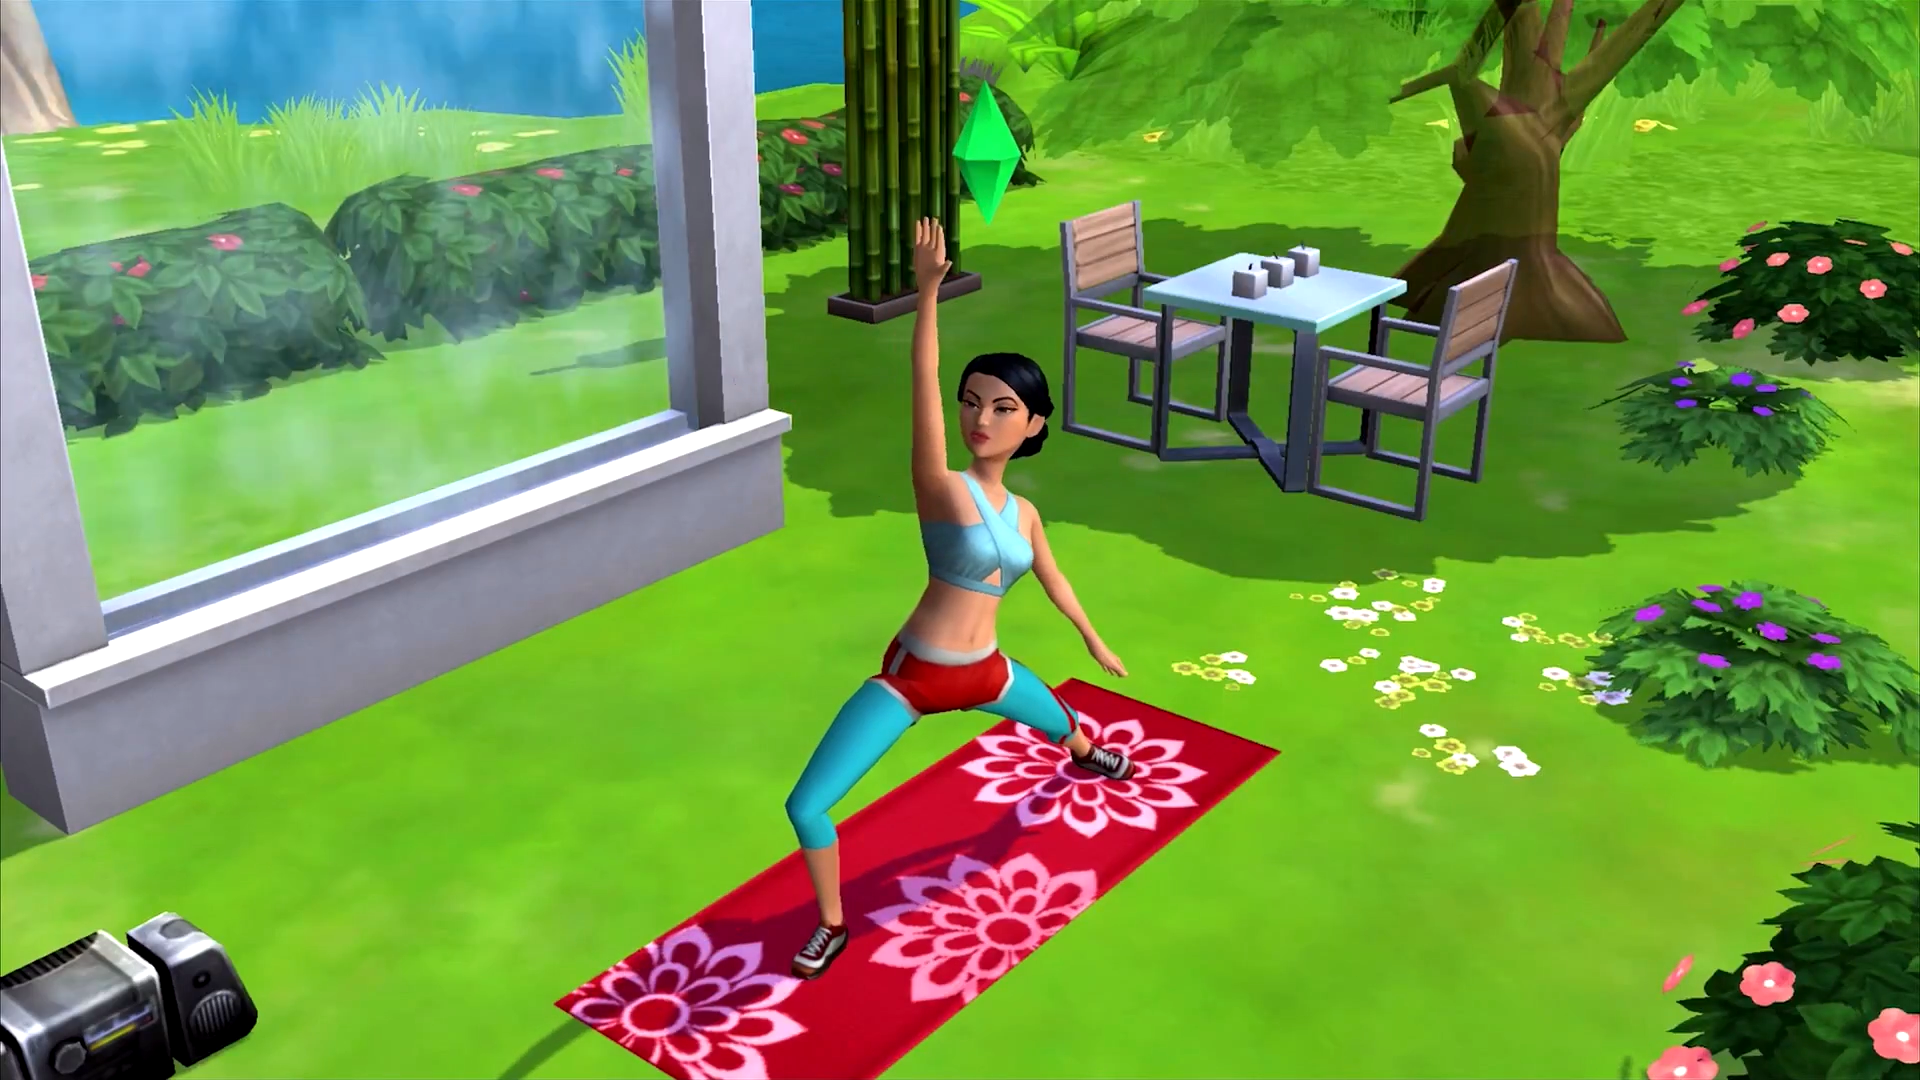 Maxis Announces "The Sims Mobile" | SimsVIP